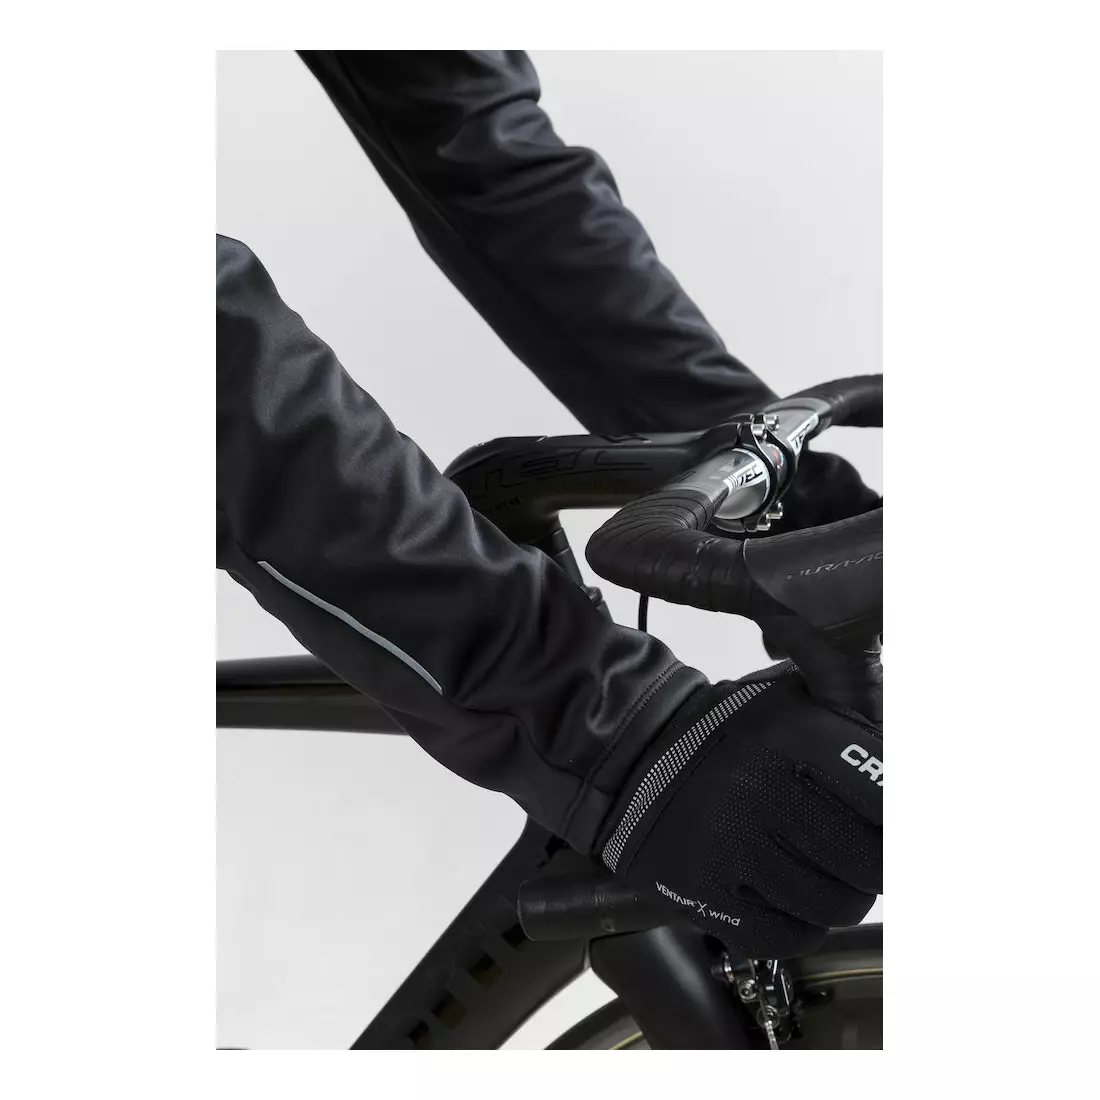 CRAFT RIME winter cycling jacket, black 1905452-999926